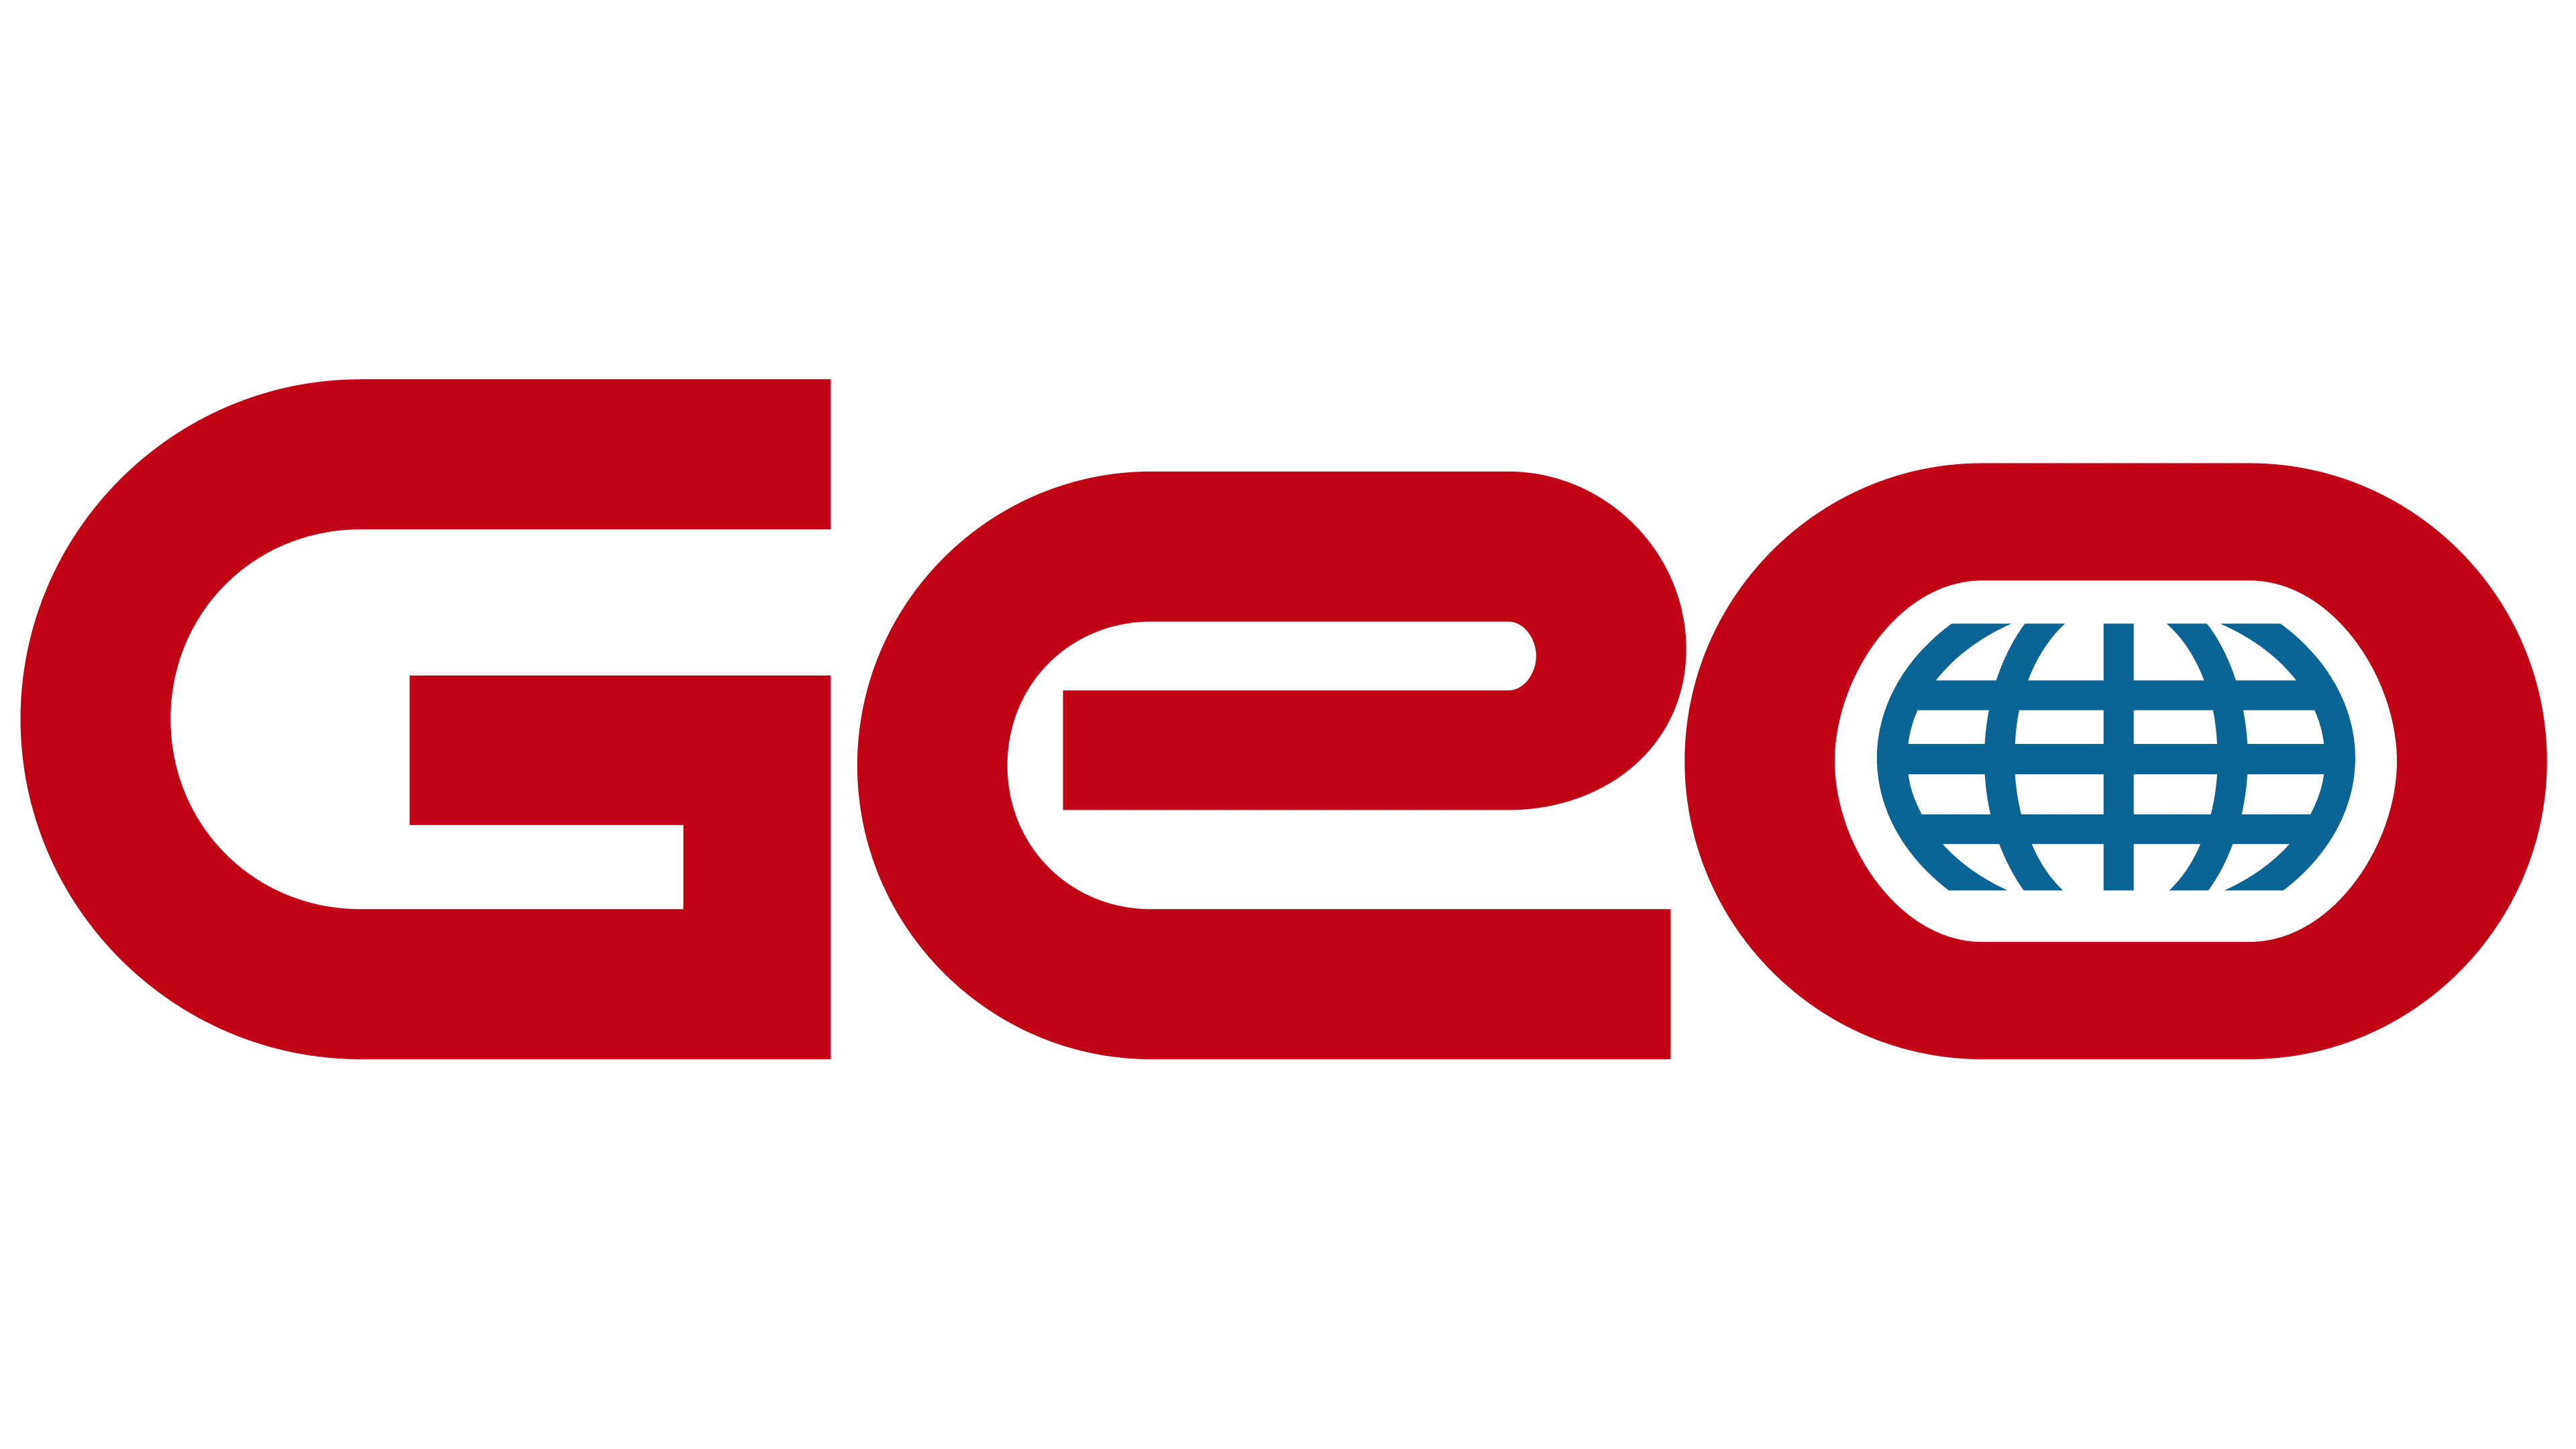 Geo Transparent Logo PNG